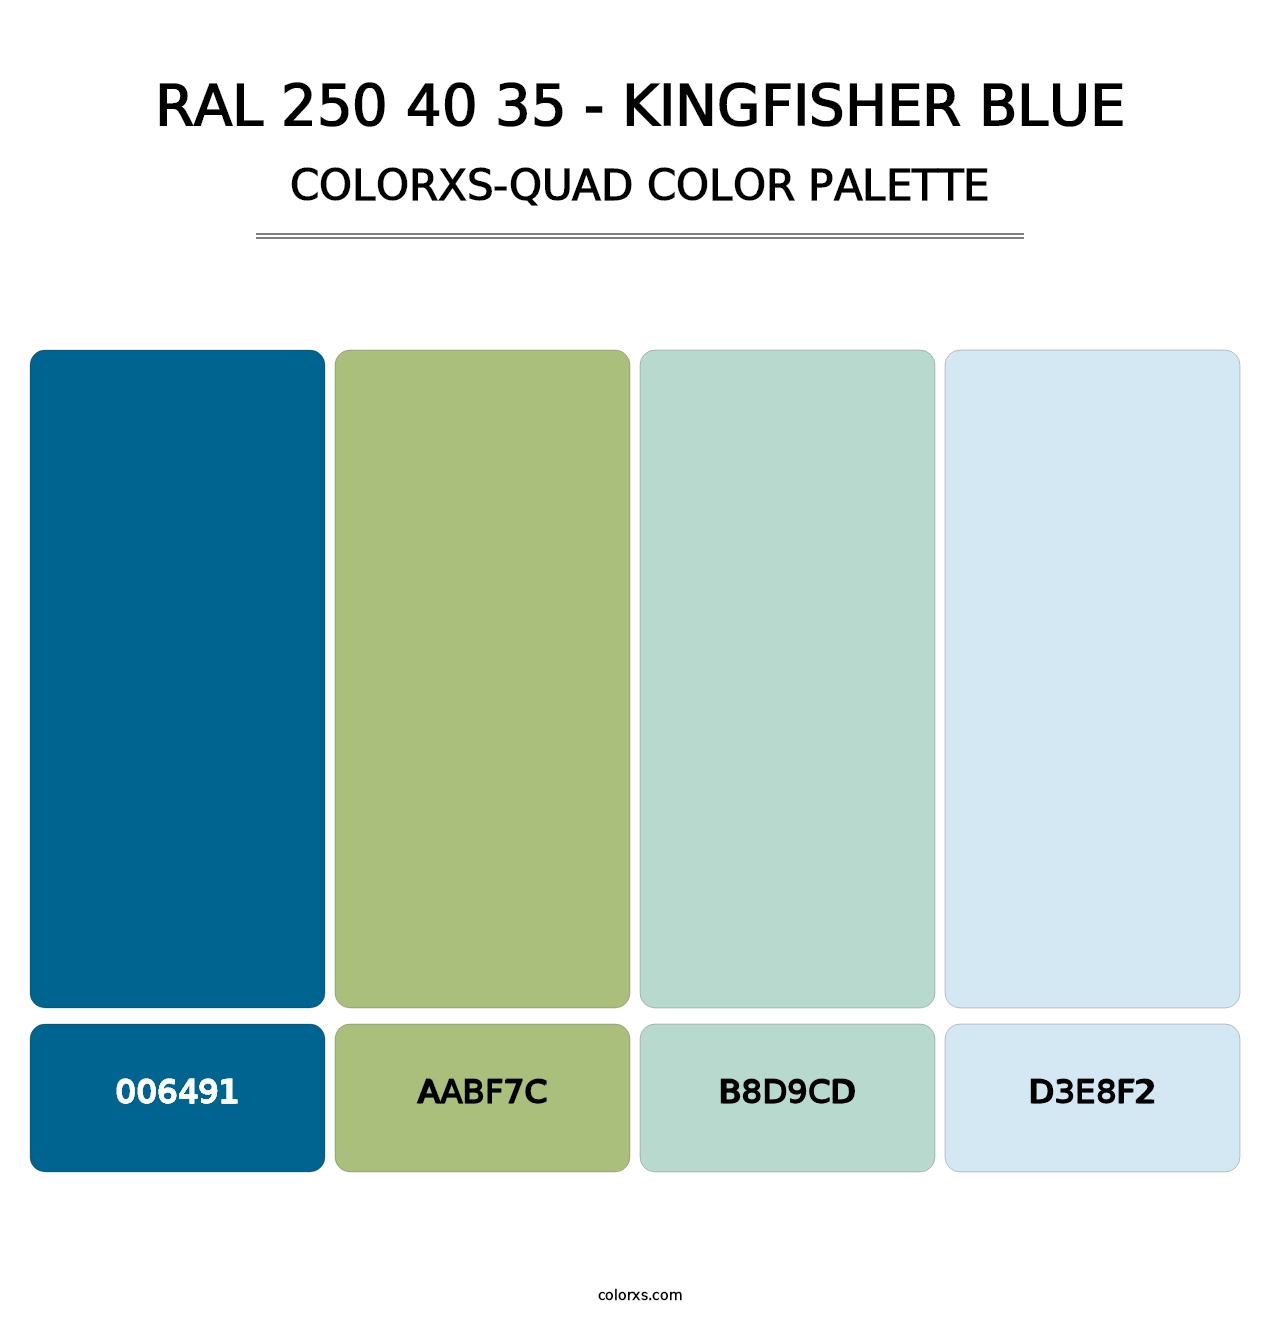 RAL 250 40 35 - Kingfisher Blue - Colorxs Quad Palette